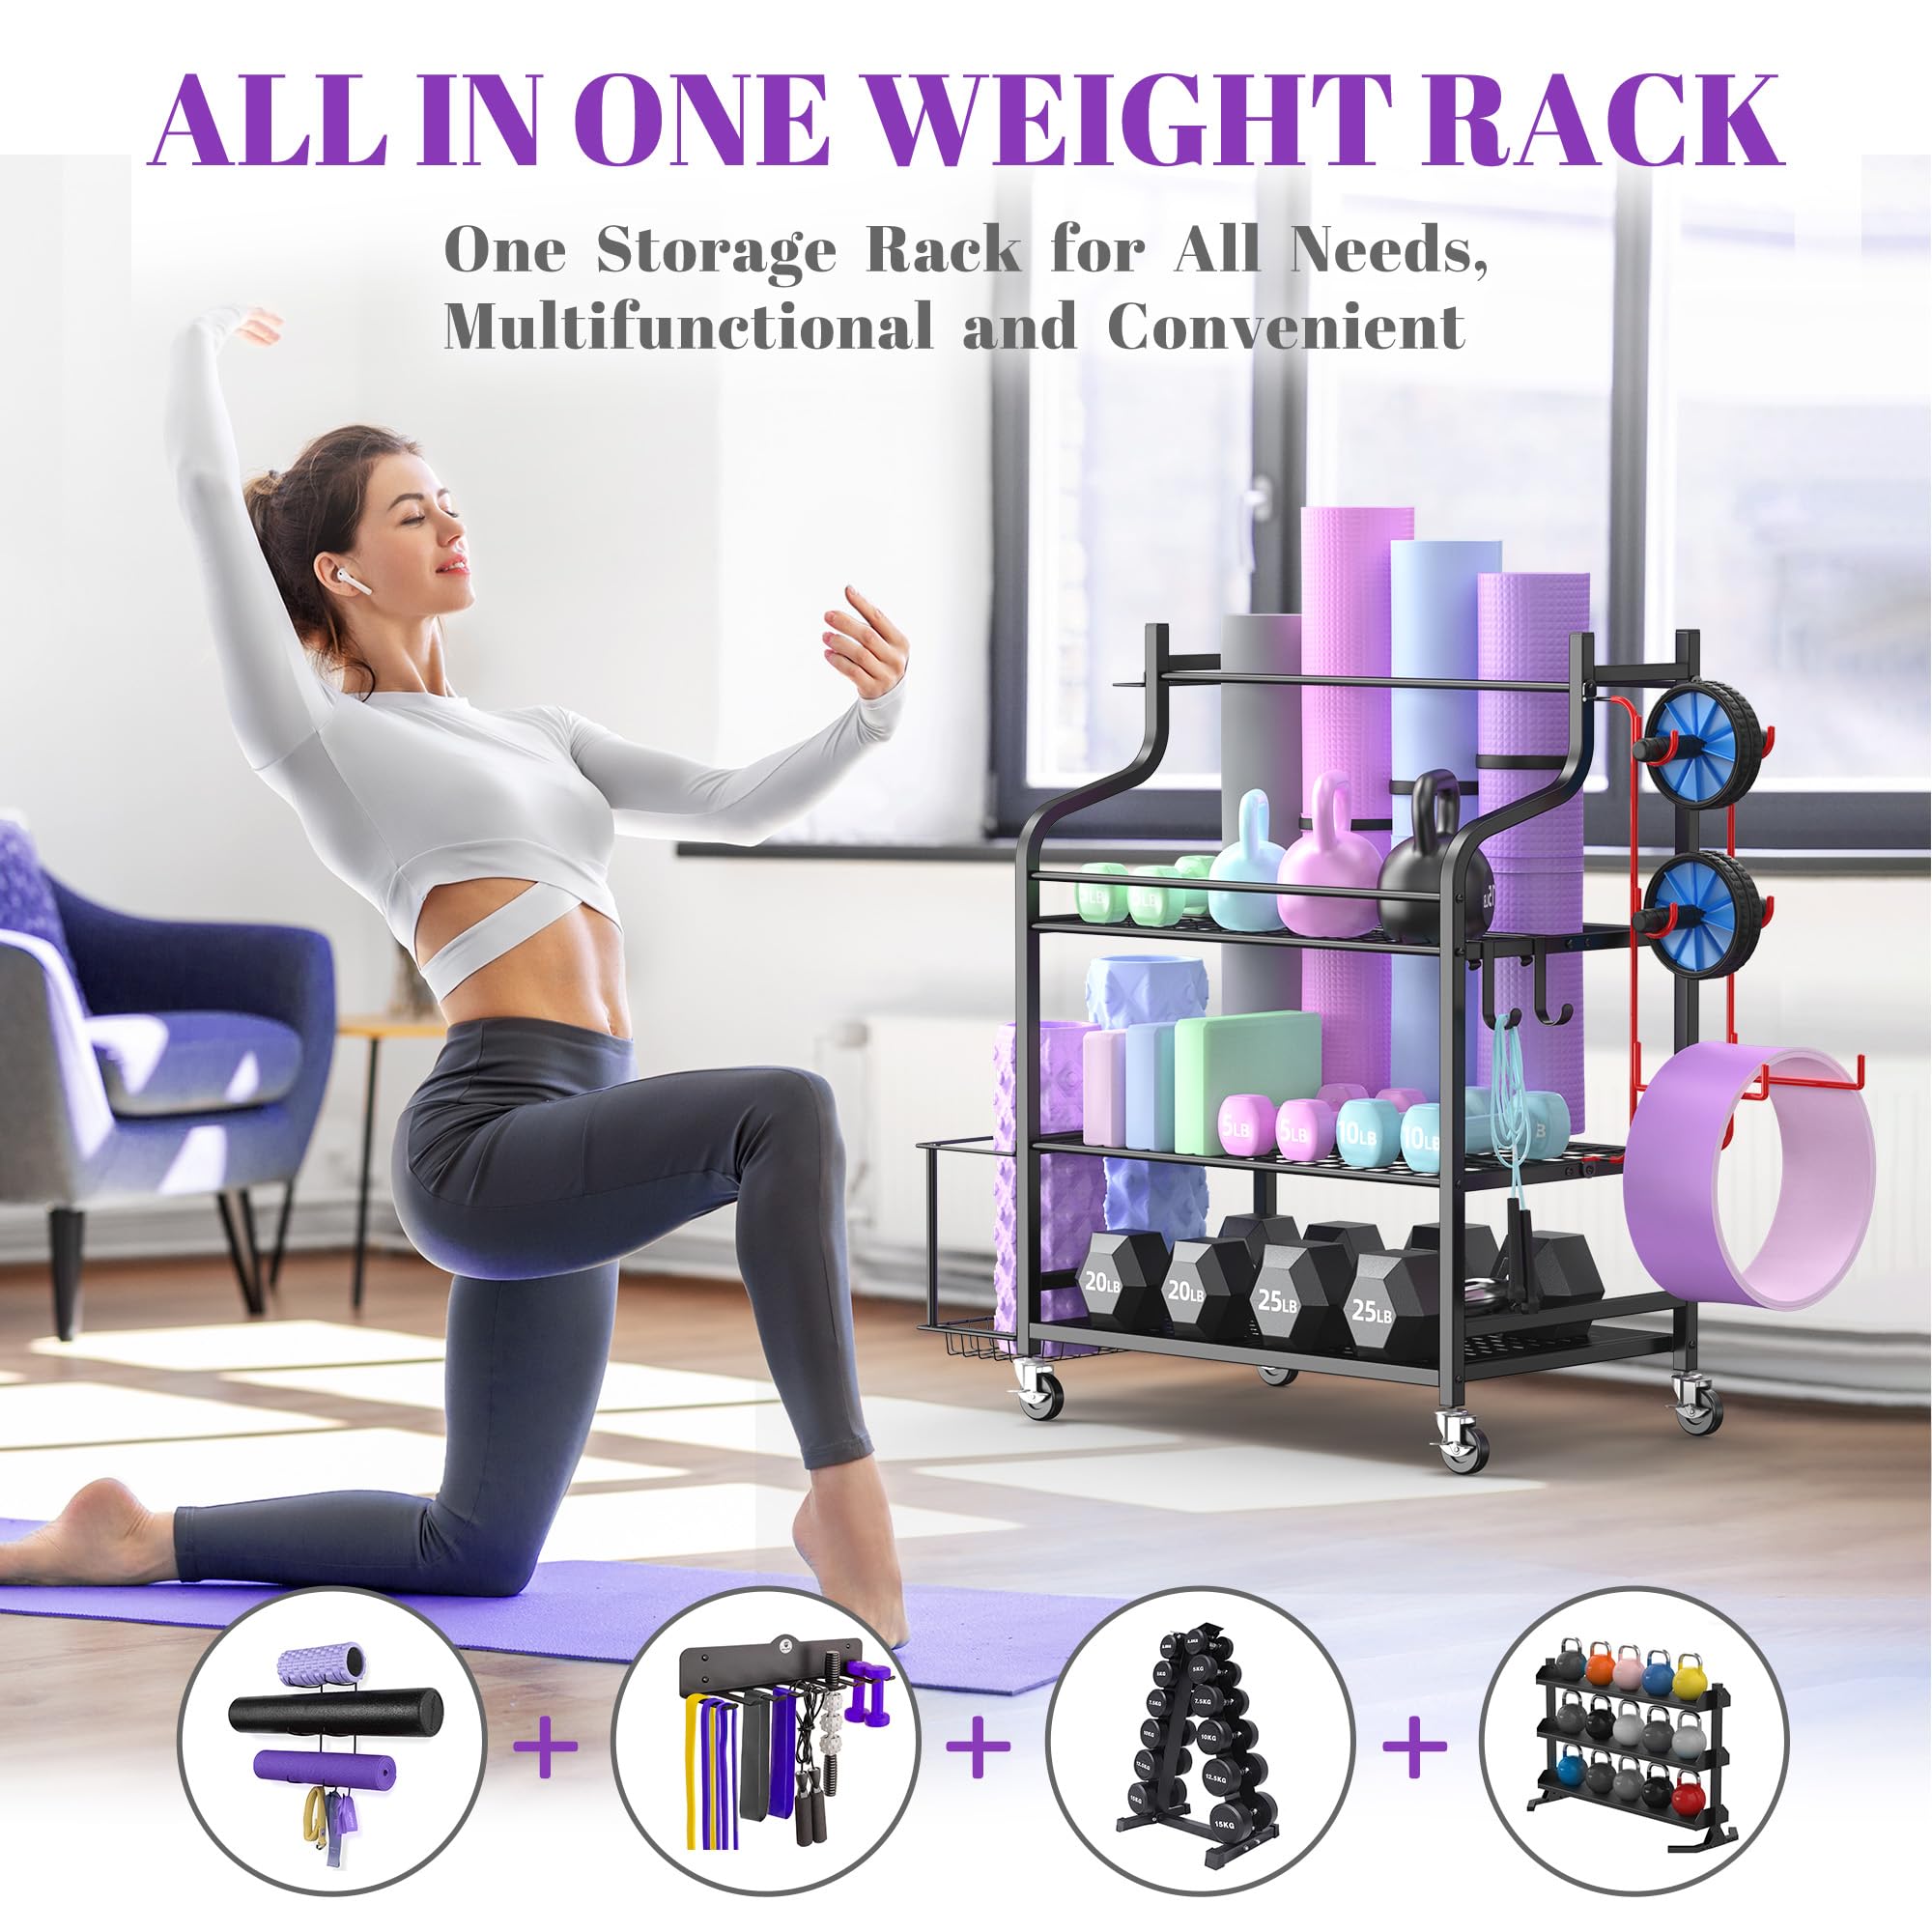 Mythinglogic Home Gym Storage Rack for Yoga Equipment, Black